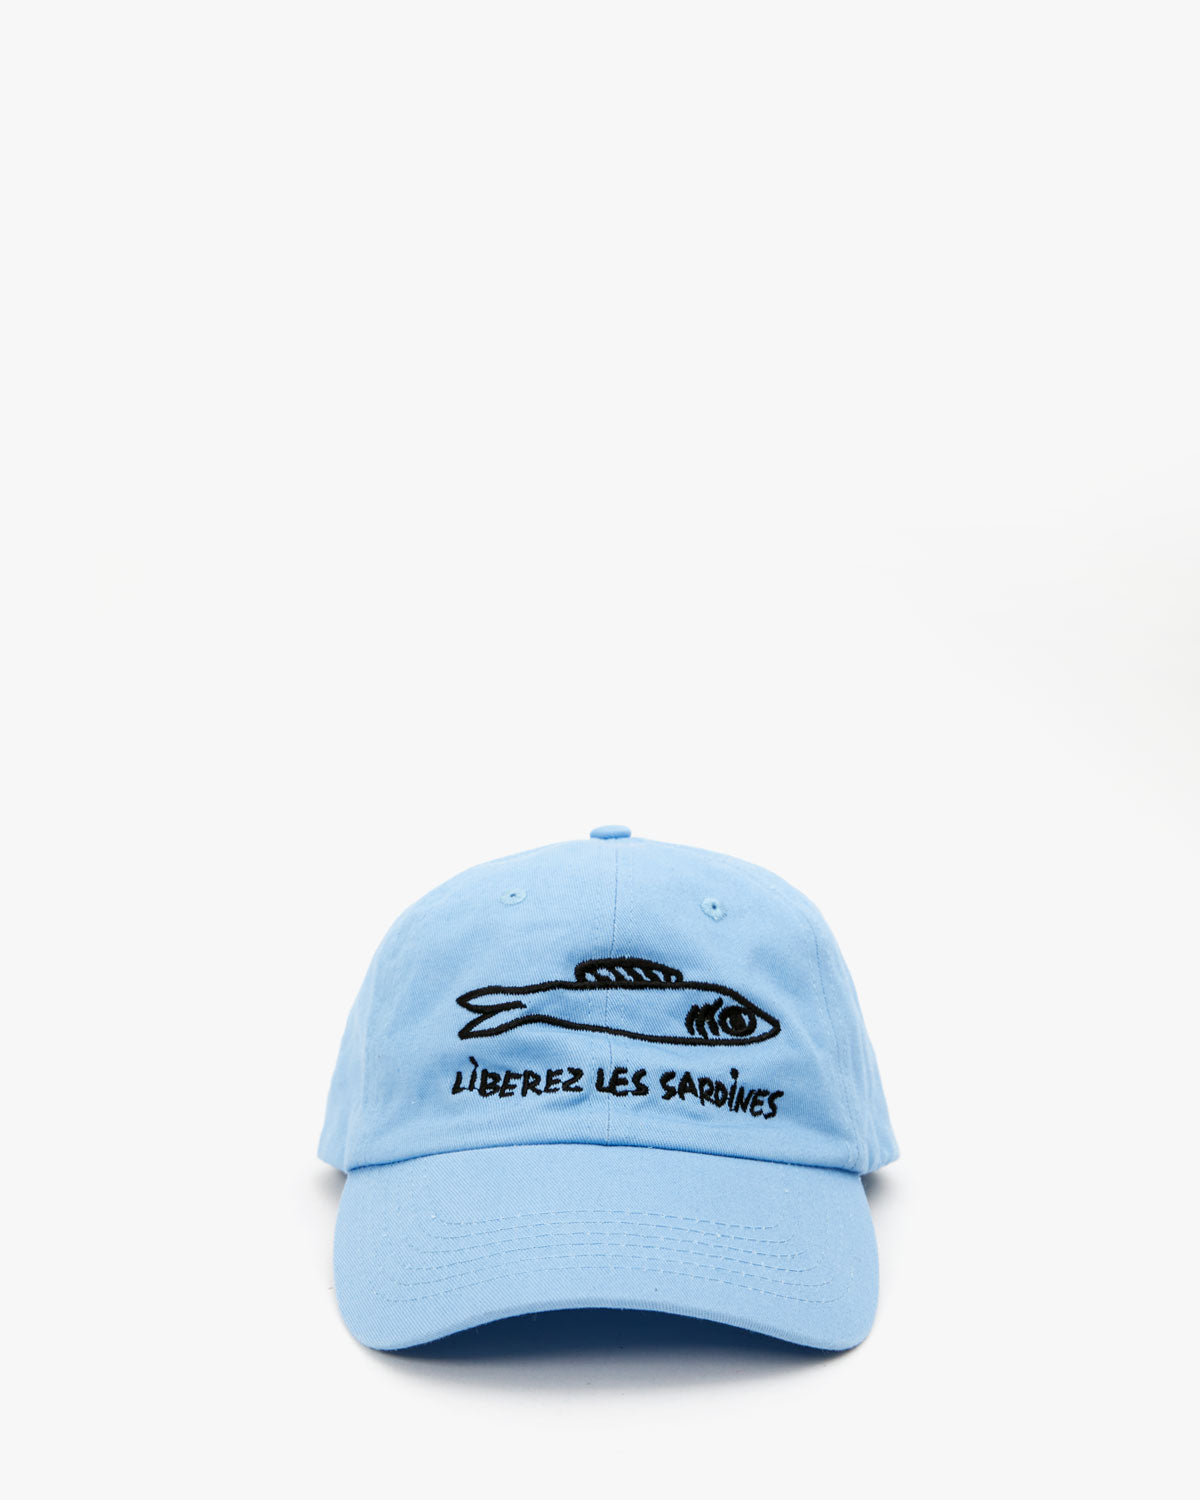 Trucker Hat - Navy w/ Green Leberez Les Sardines